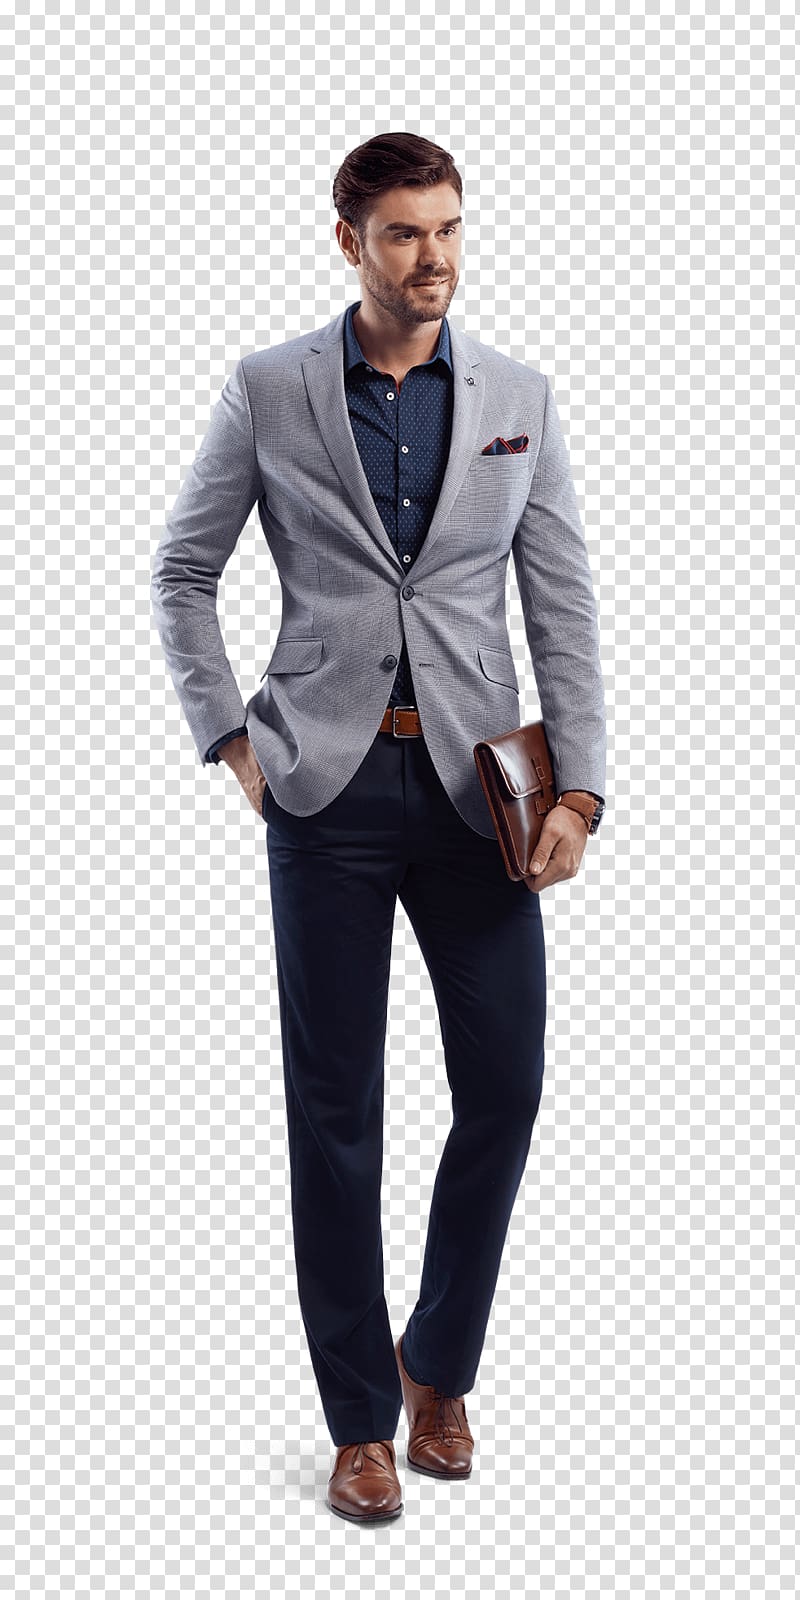 T-shirt Formal wear Jacket Suit Clothing, black man transparent background PNG clipart